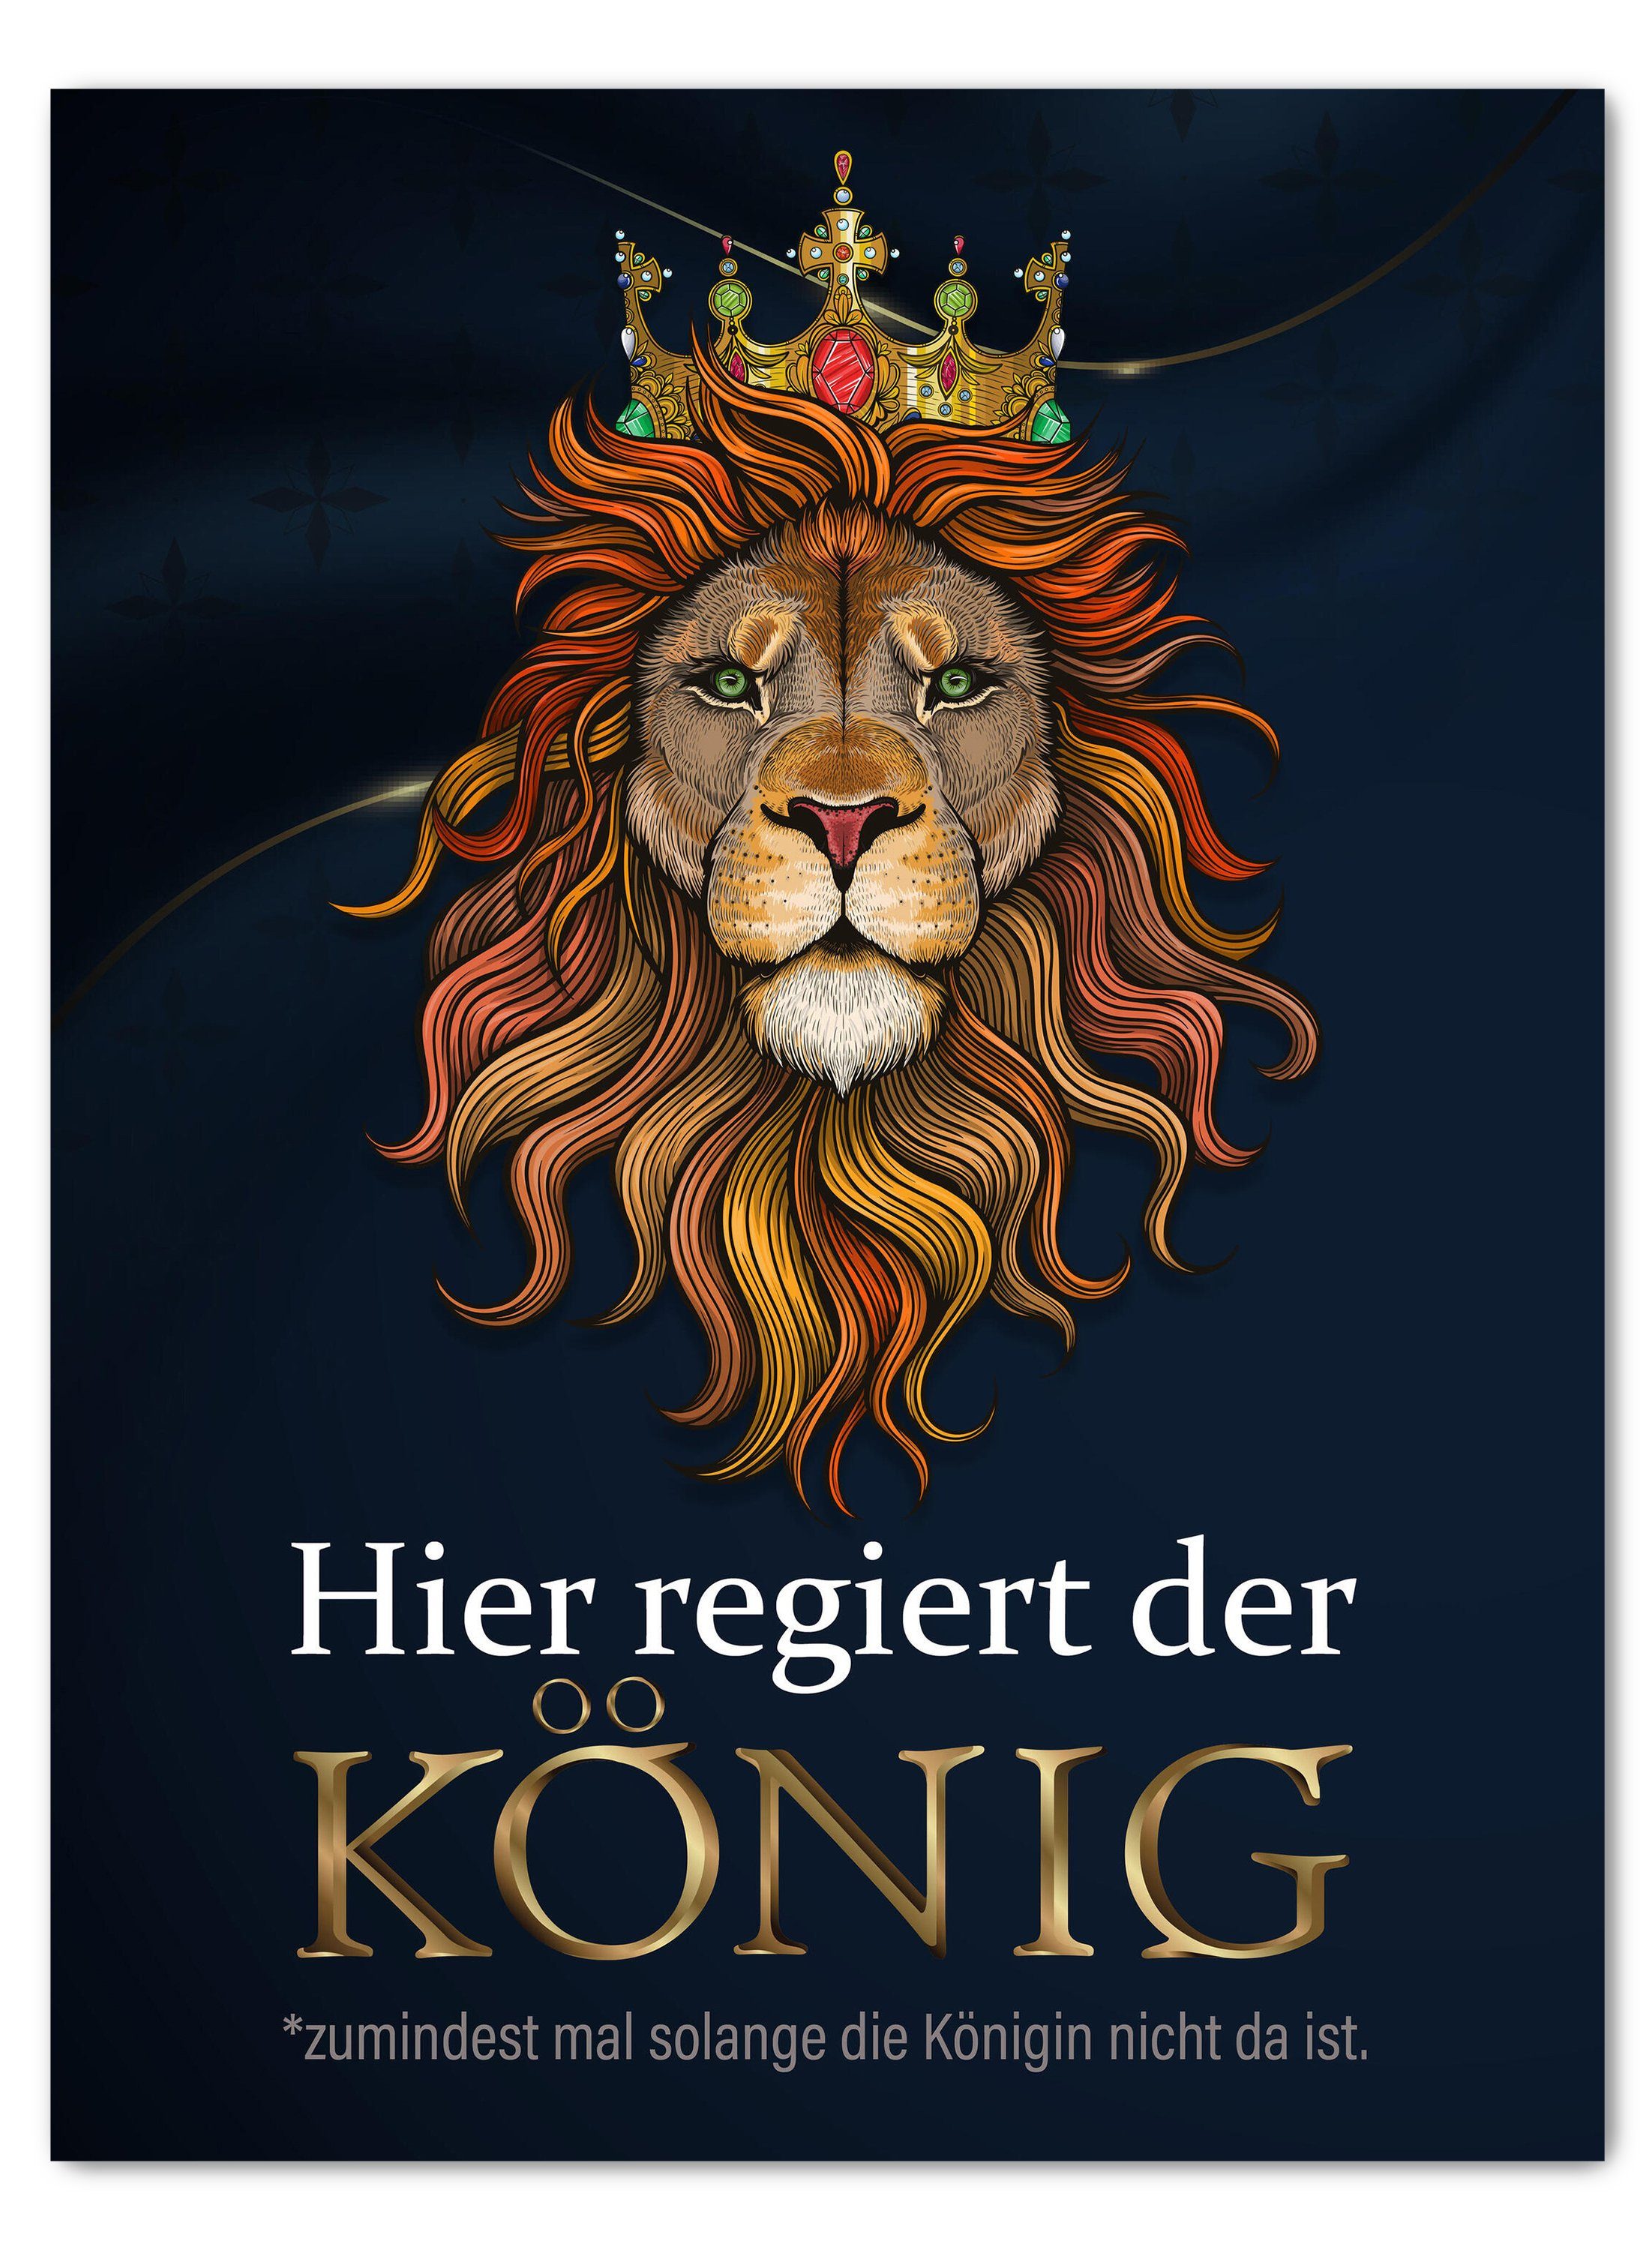 wandmotiv24 Leinwandbild Löwen, Hochformat, König der Löwen, Tiere (1 St), Wandbild, Wanddeko, Leinwandbilder in versch. Größen